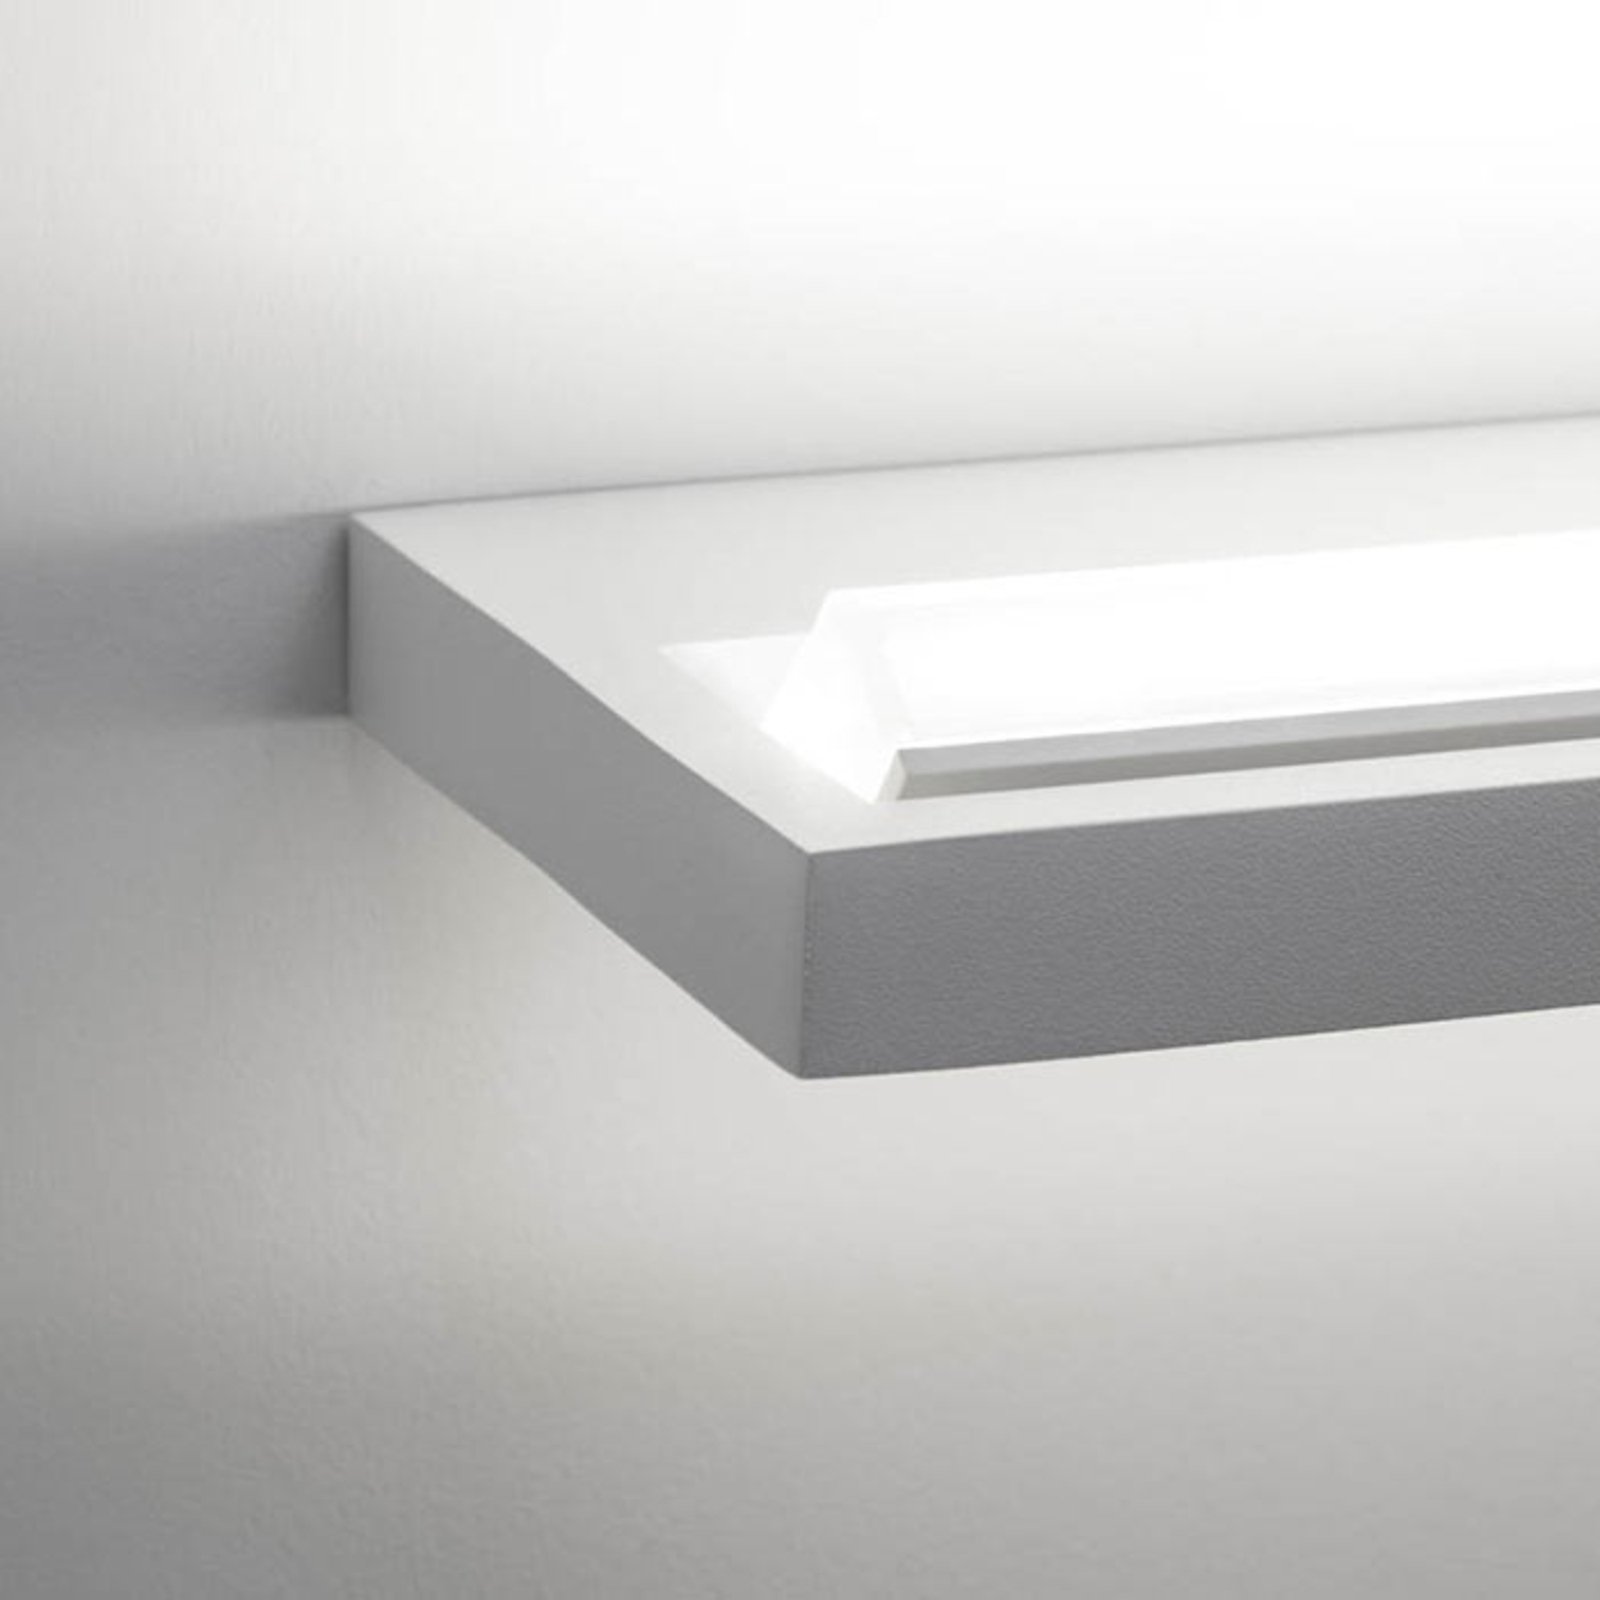 Tablet W1 LED wall light, width 66 cm, white